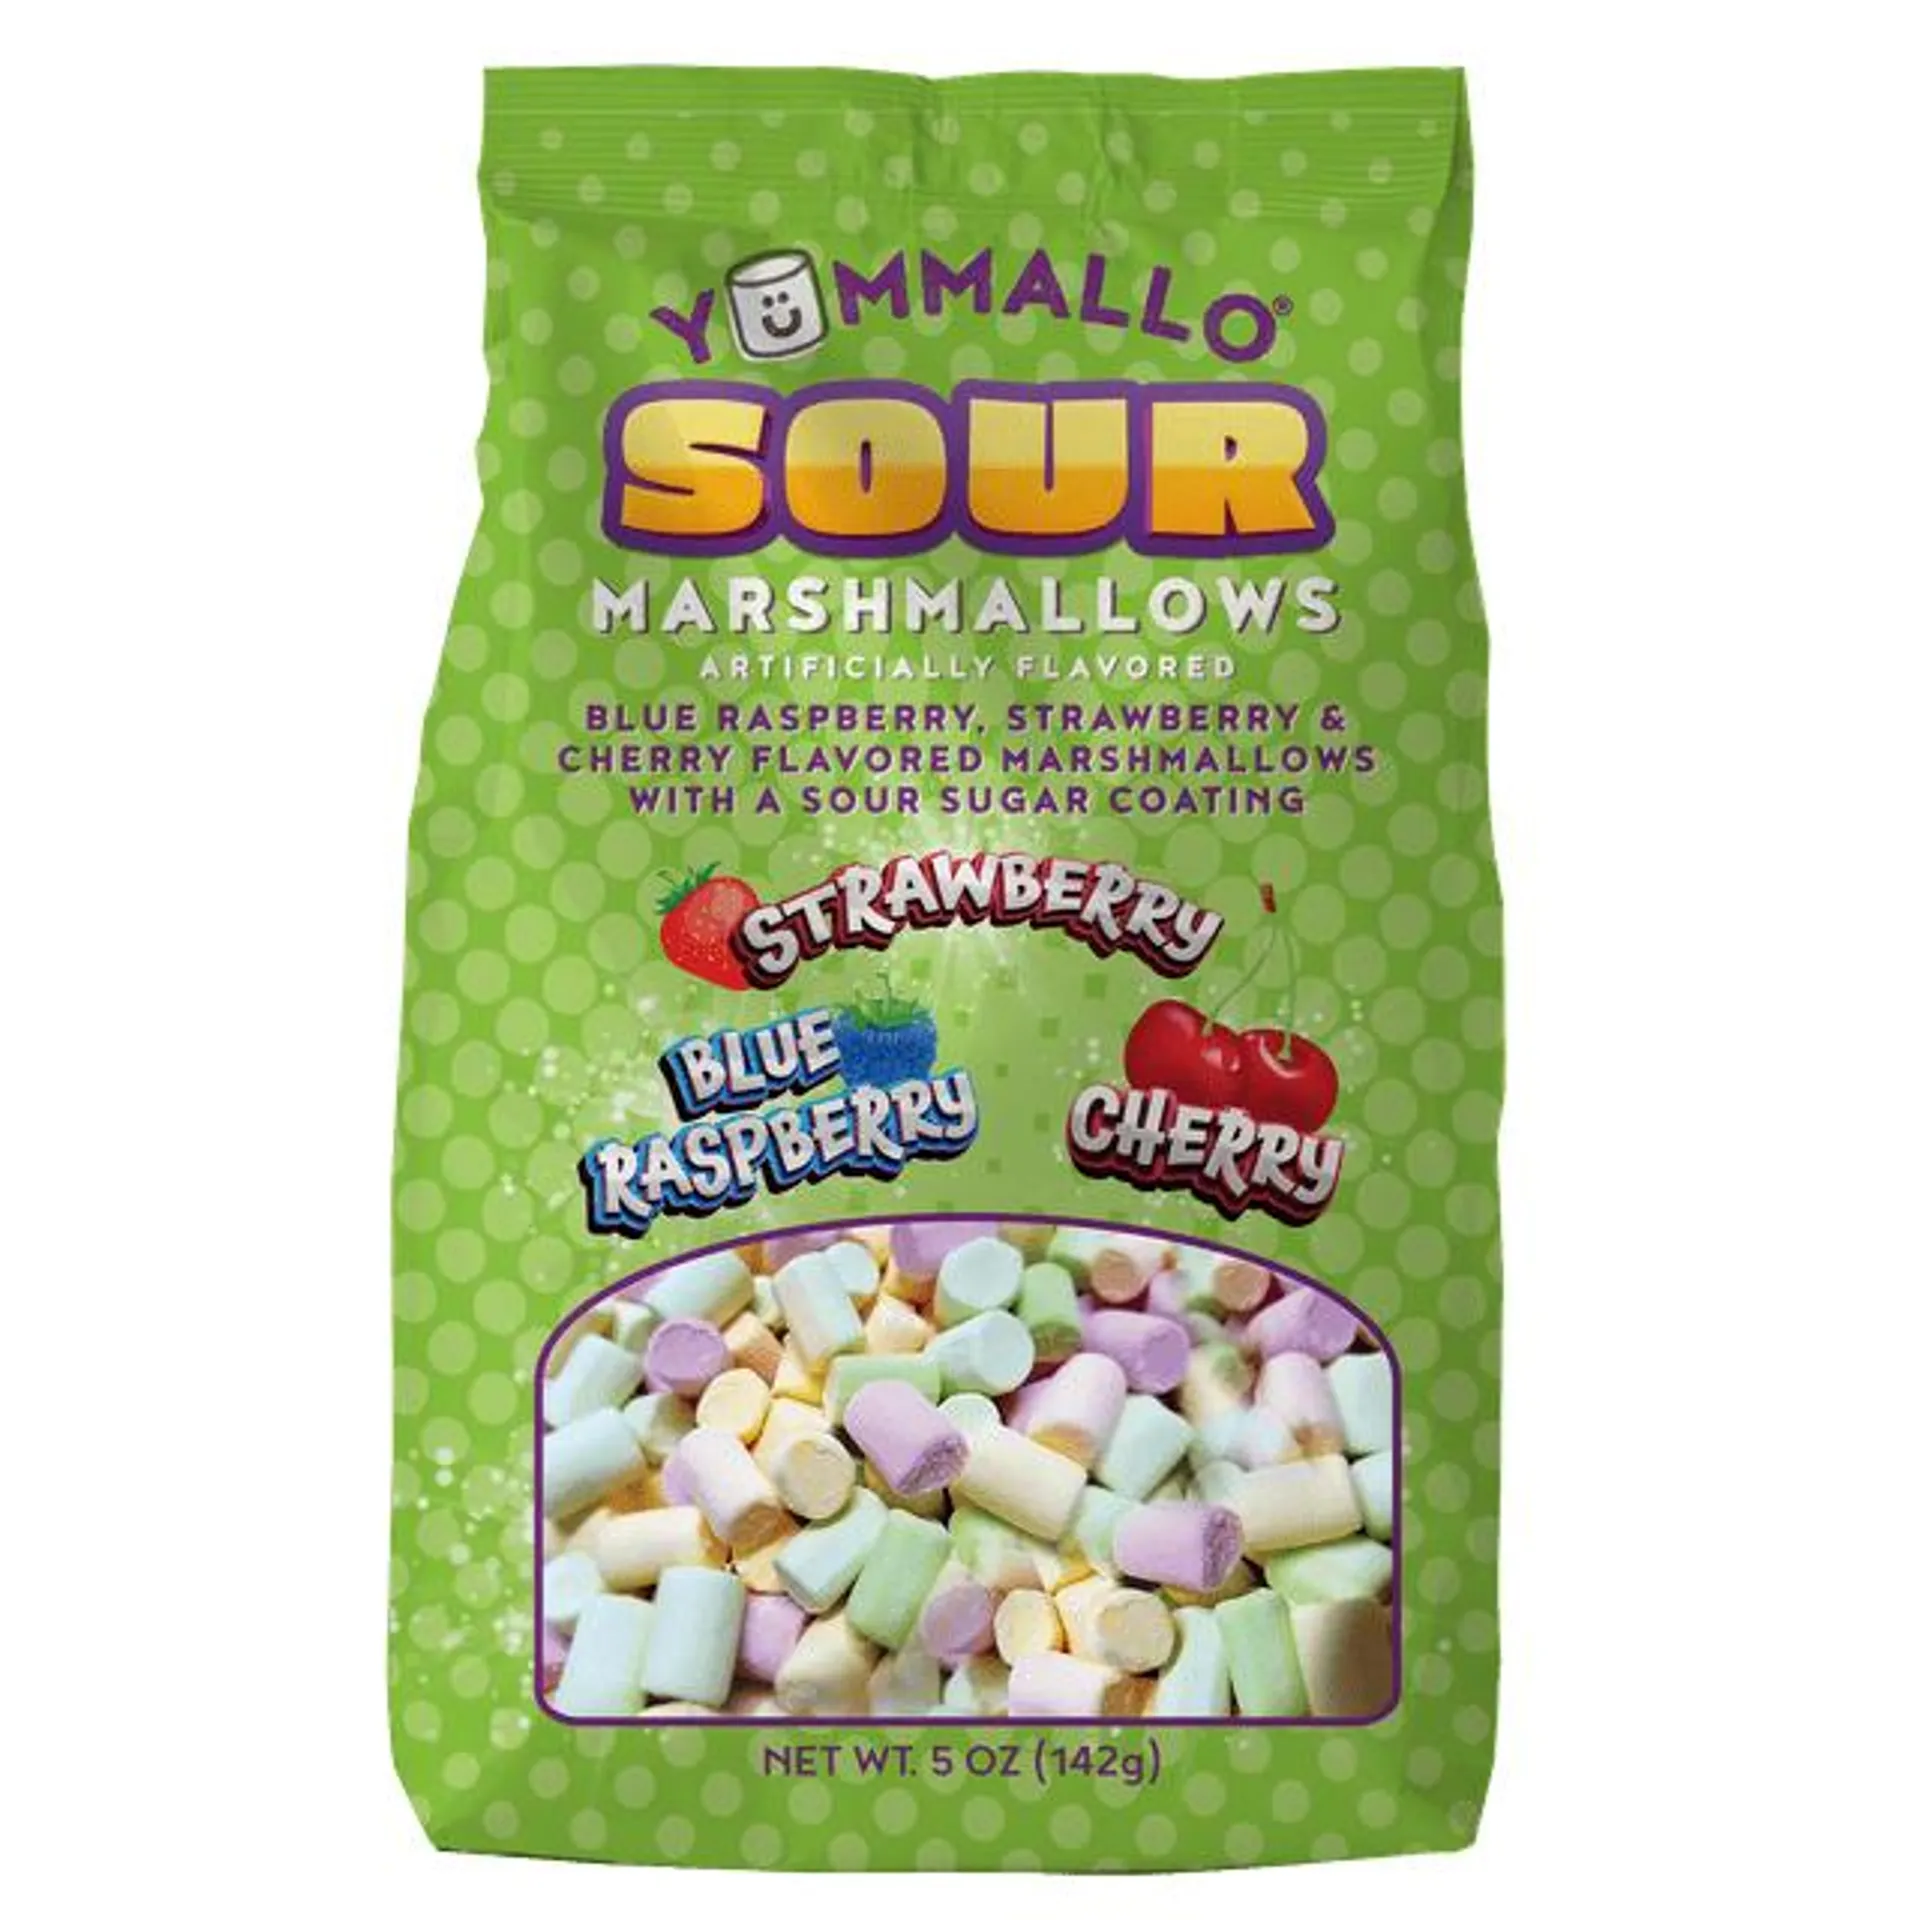 Yummallo Sour Marshmallows, 5 oz (142 g)